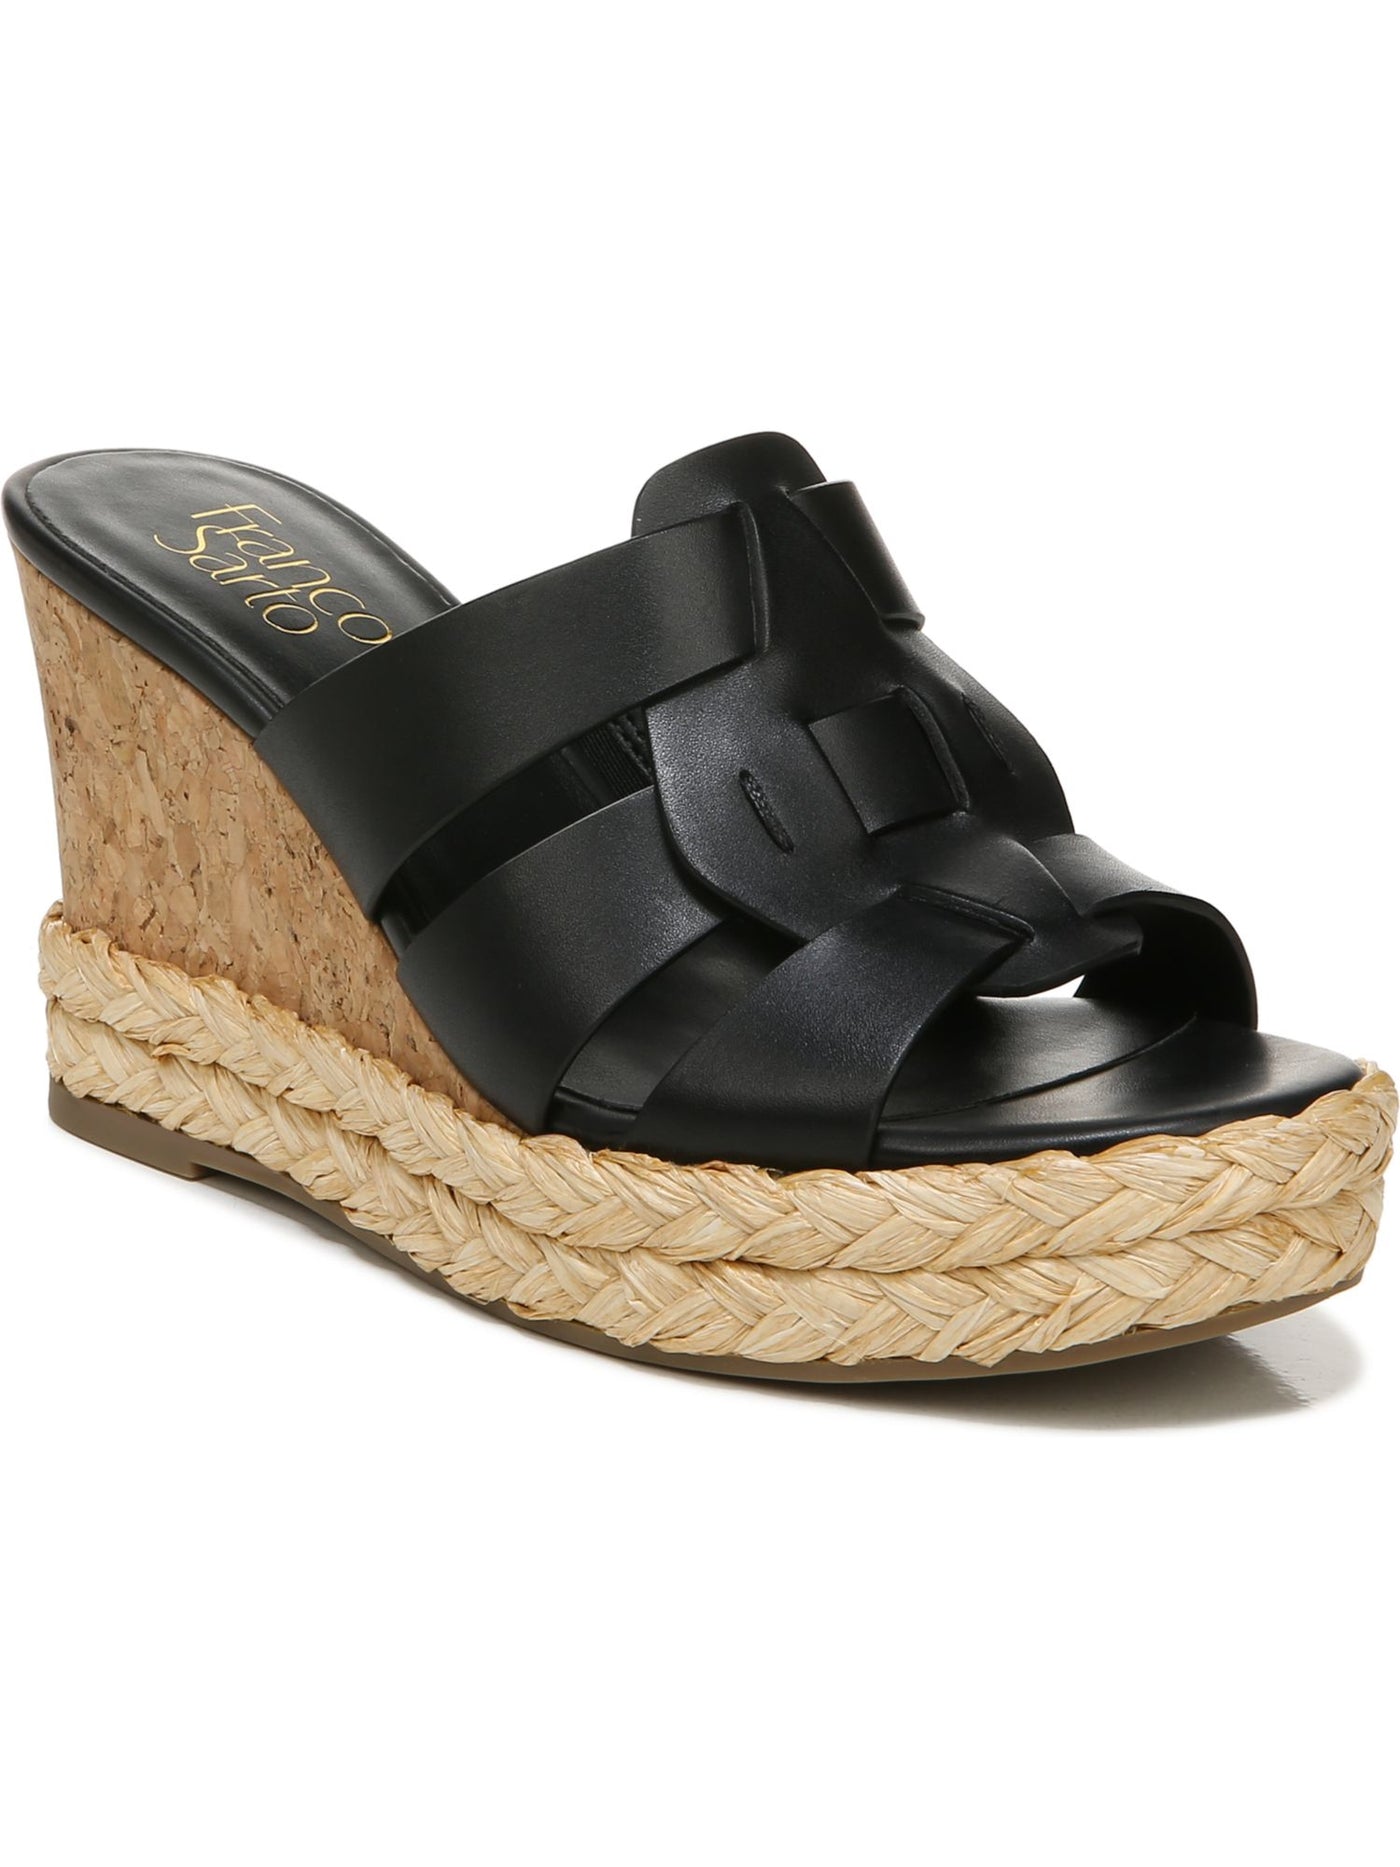 FRANCO SARTO Womens Black Cork 1" Platform Padded Woven Fioret Round Toe Wedge Slip On Leather Espadrille Shoes 7.5 M